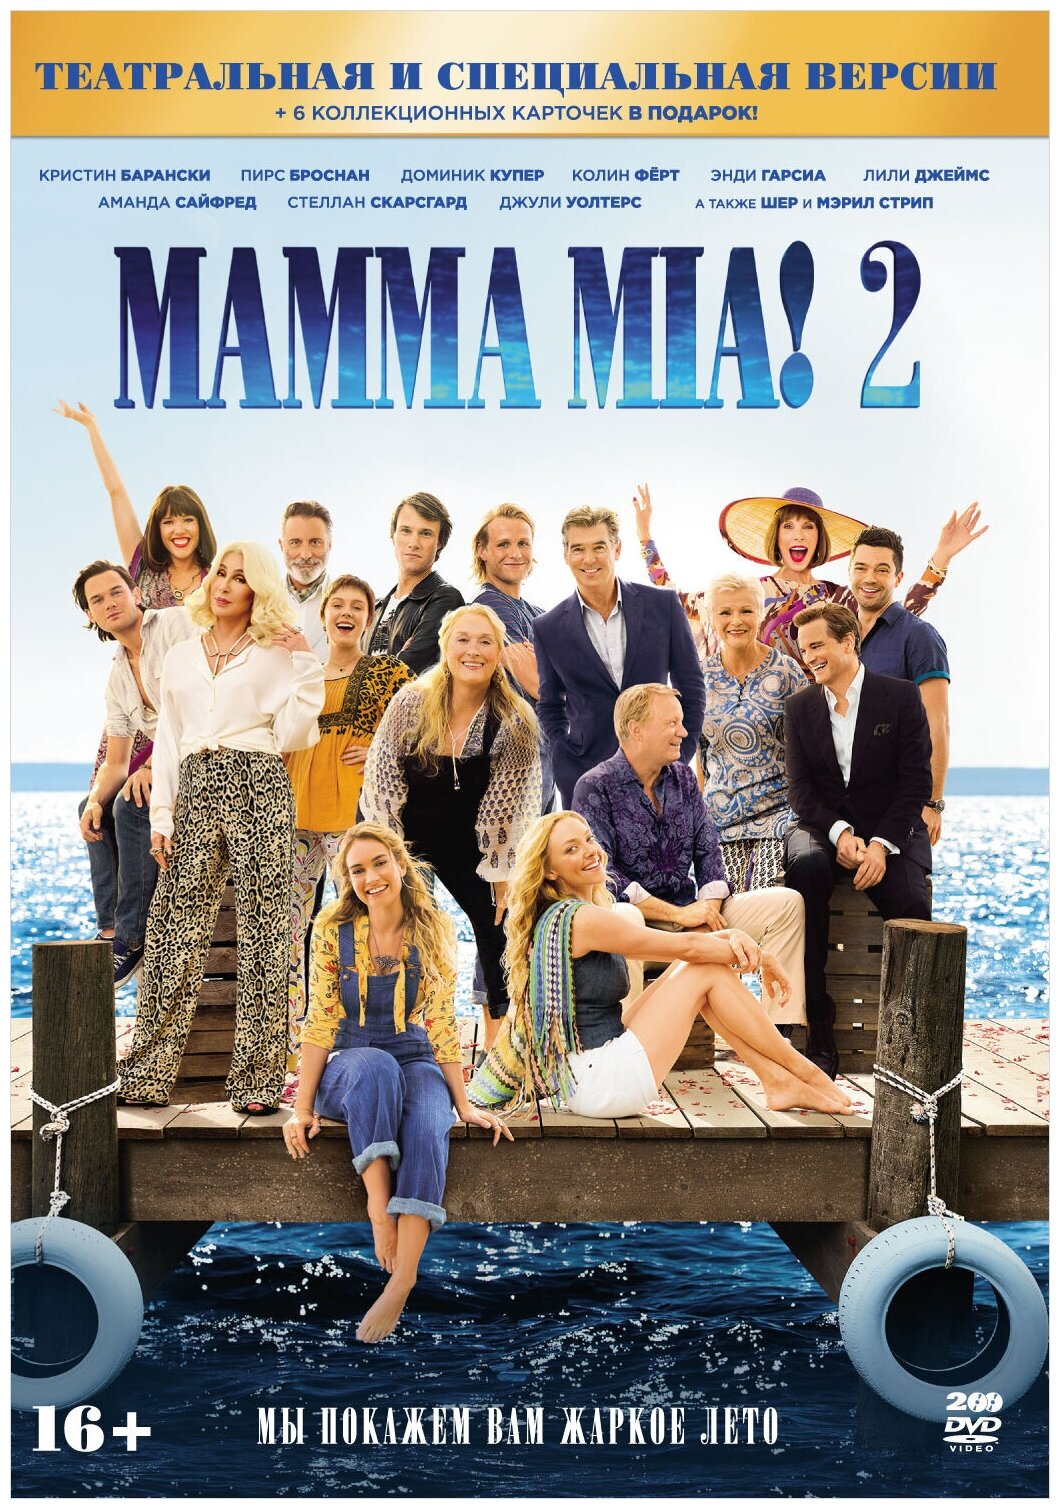 MAMMA MIA! 2: Специальное издание (2 DVD)